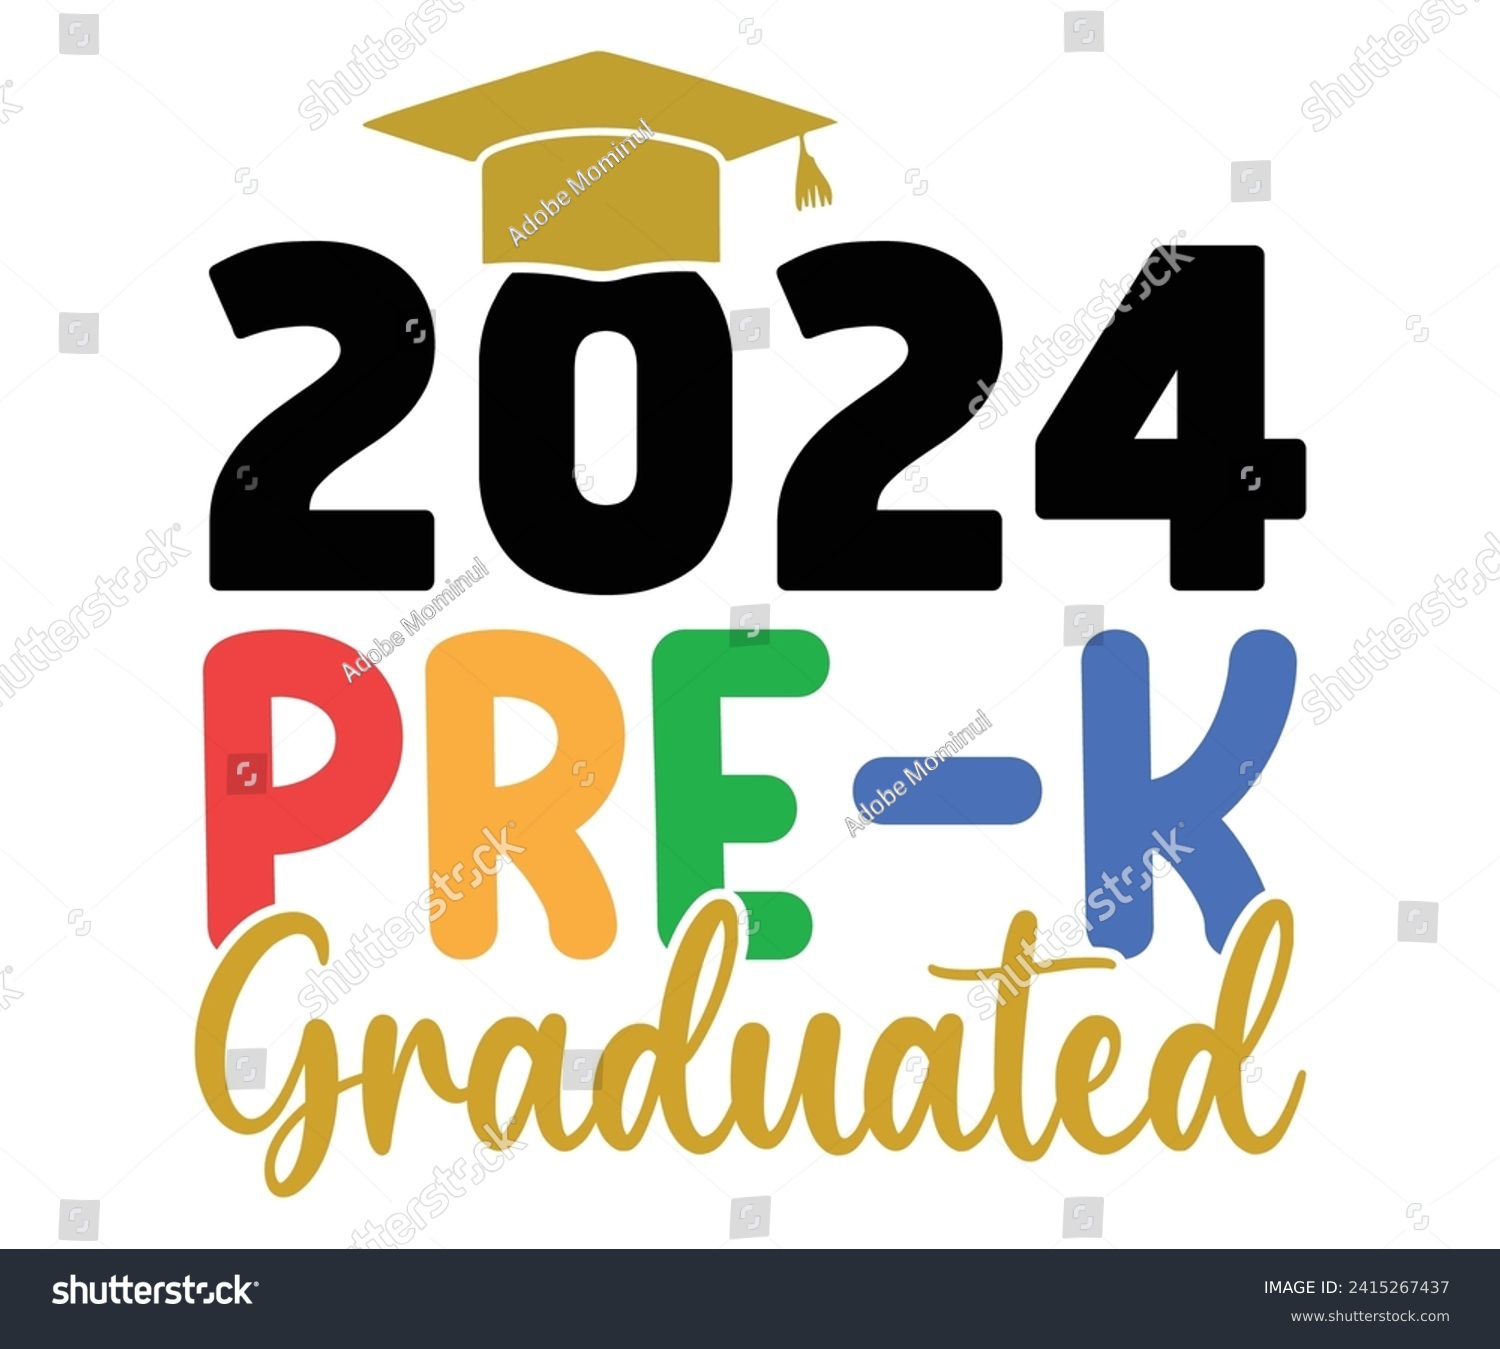 SVG of Pre-k Grad 2024,2025,Svg,Graduation Svg,Senior Svg,Graduate T shirt,Graduation cap,Graduation 2024 Shirt,Family Graduation Svg,Pre-K Grad Shirt,Graduation Qoutes,Graduation Gift Shirt,Cut File,Groovy, svg